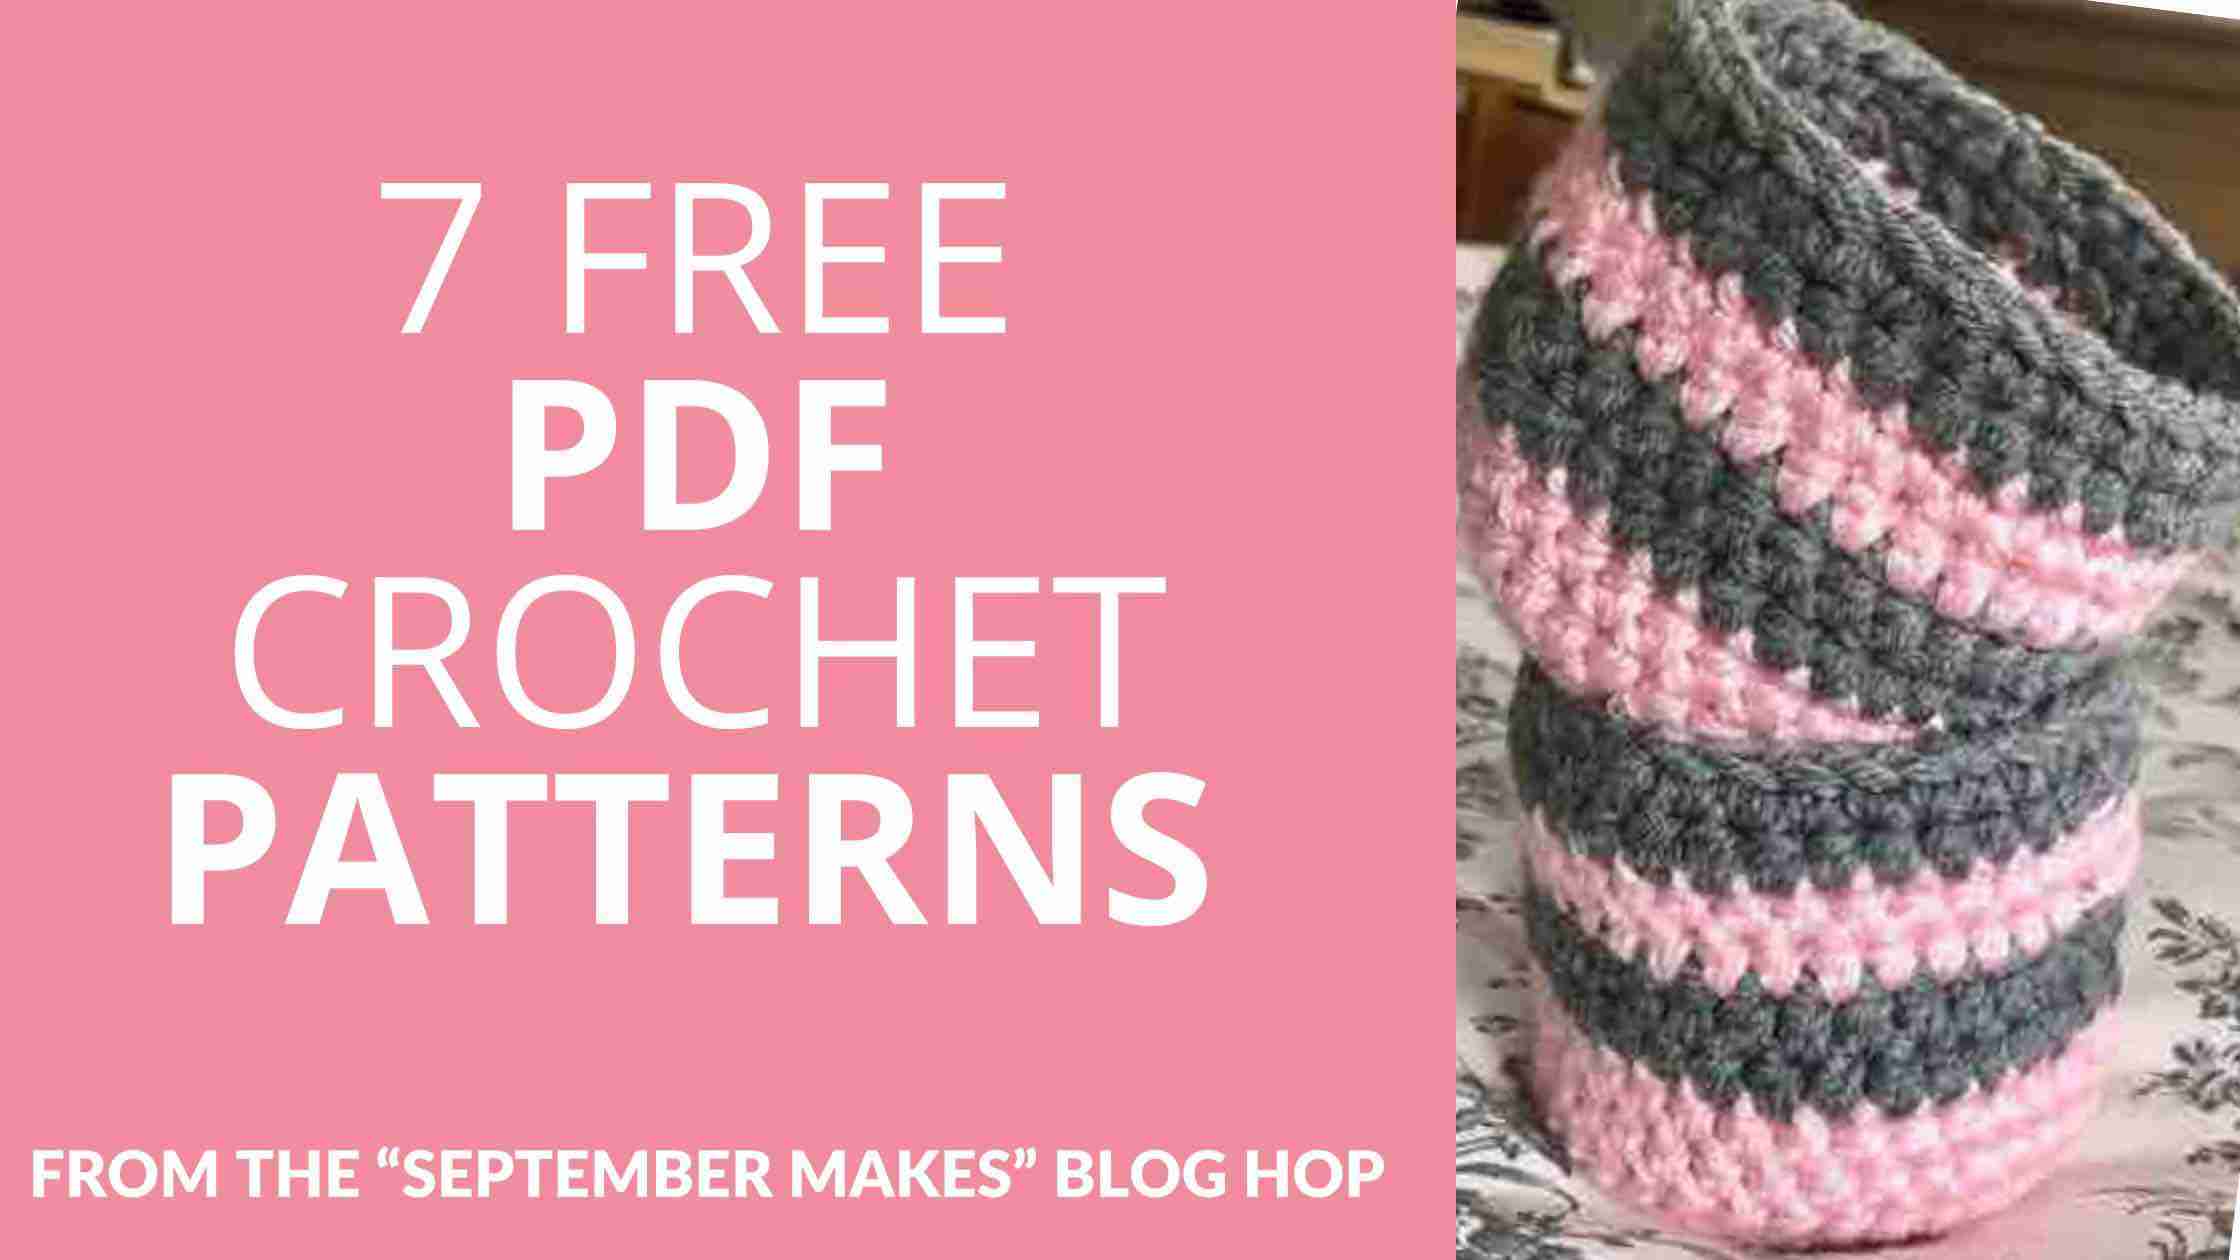 Free crochet patterns from The “September Makes” Blog Hop-